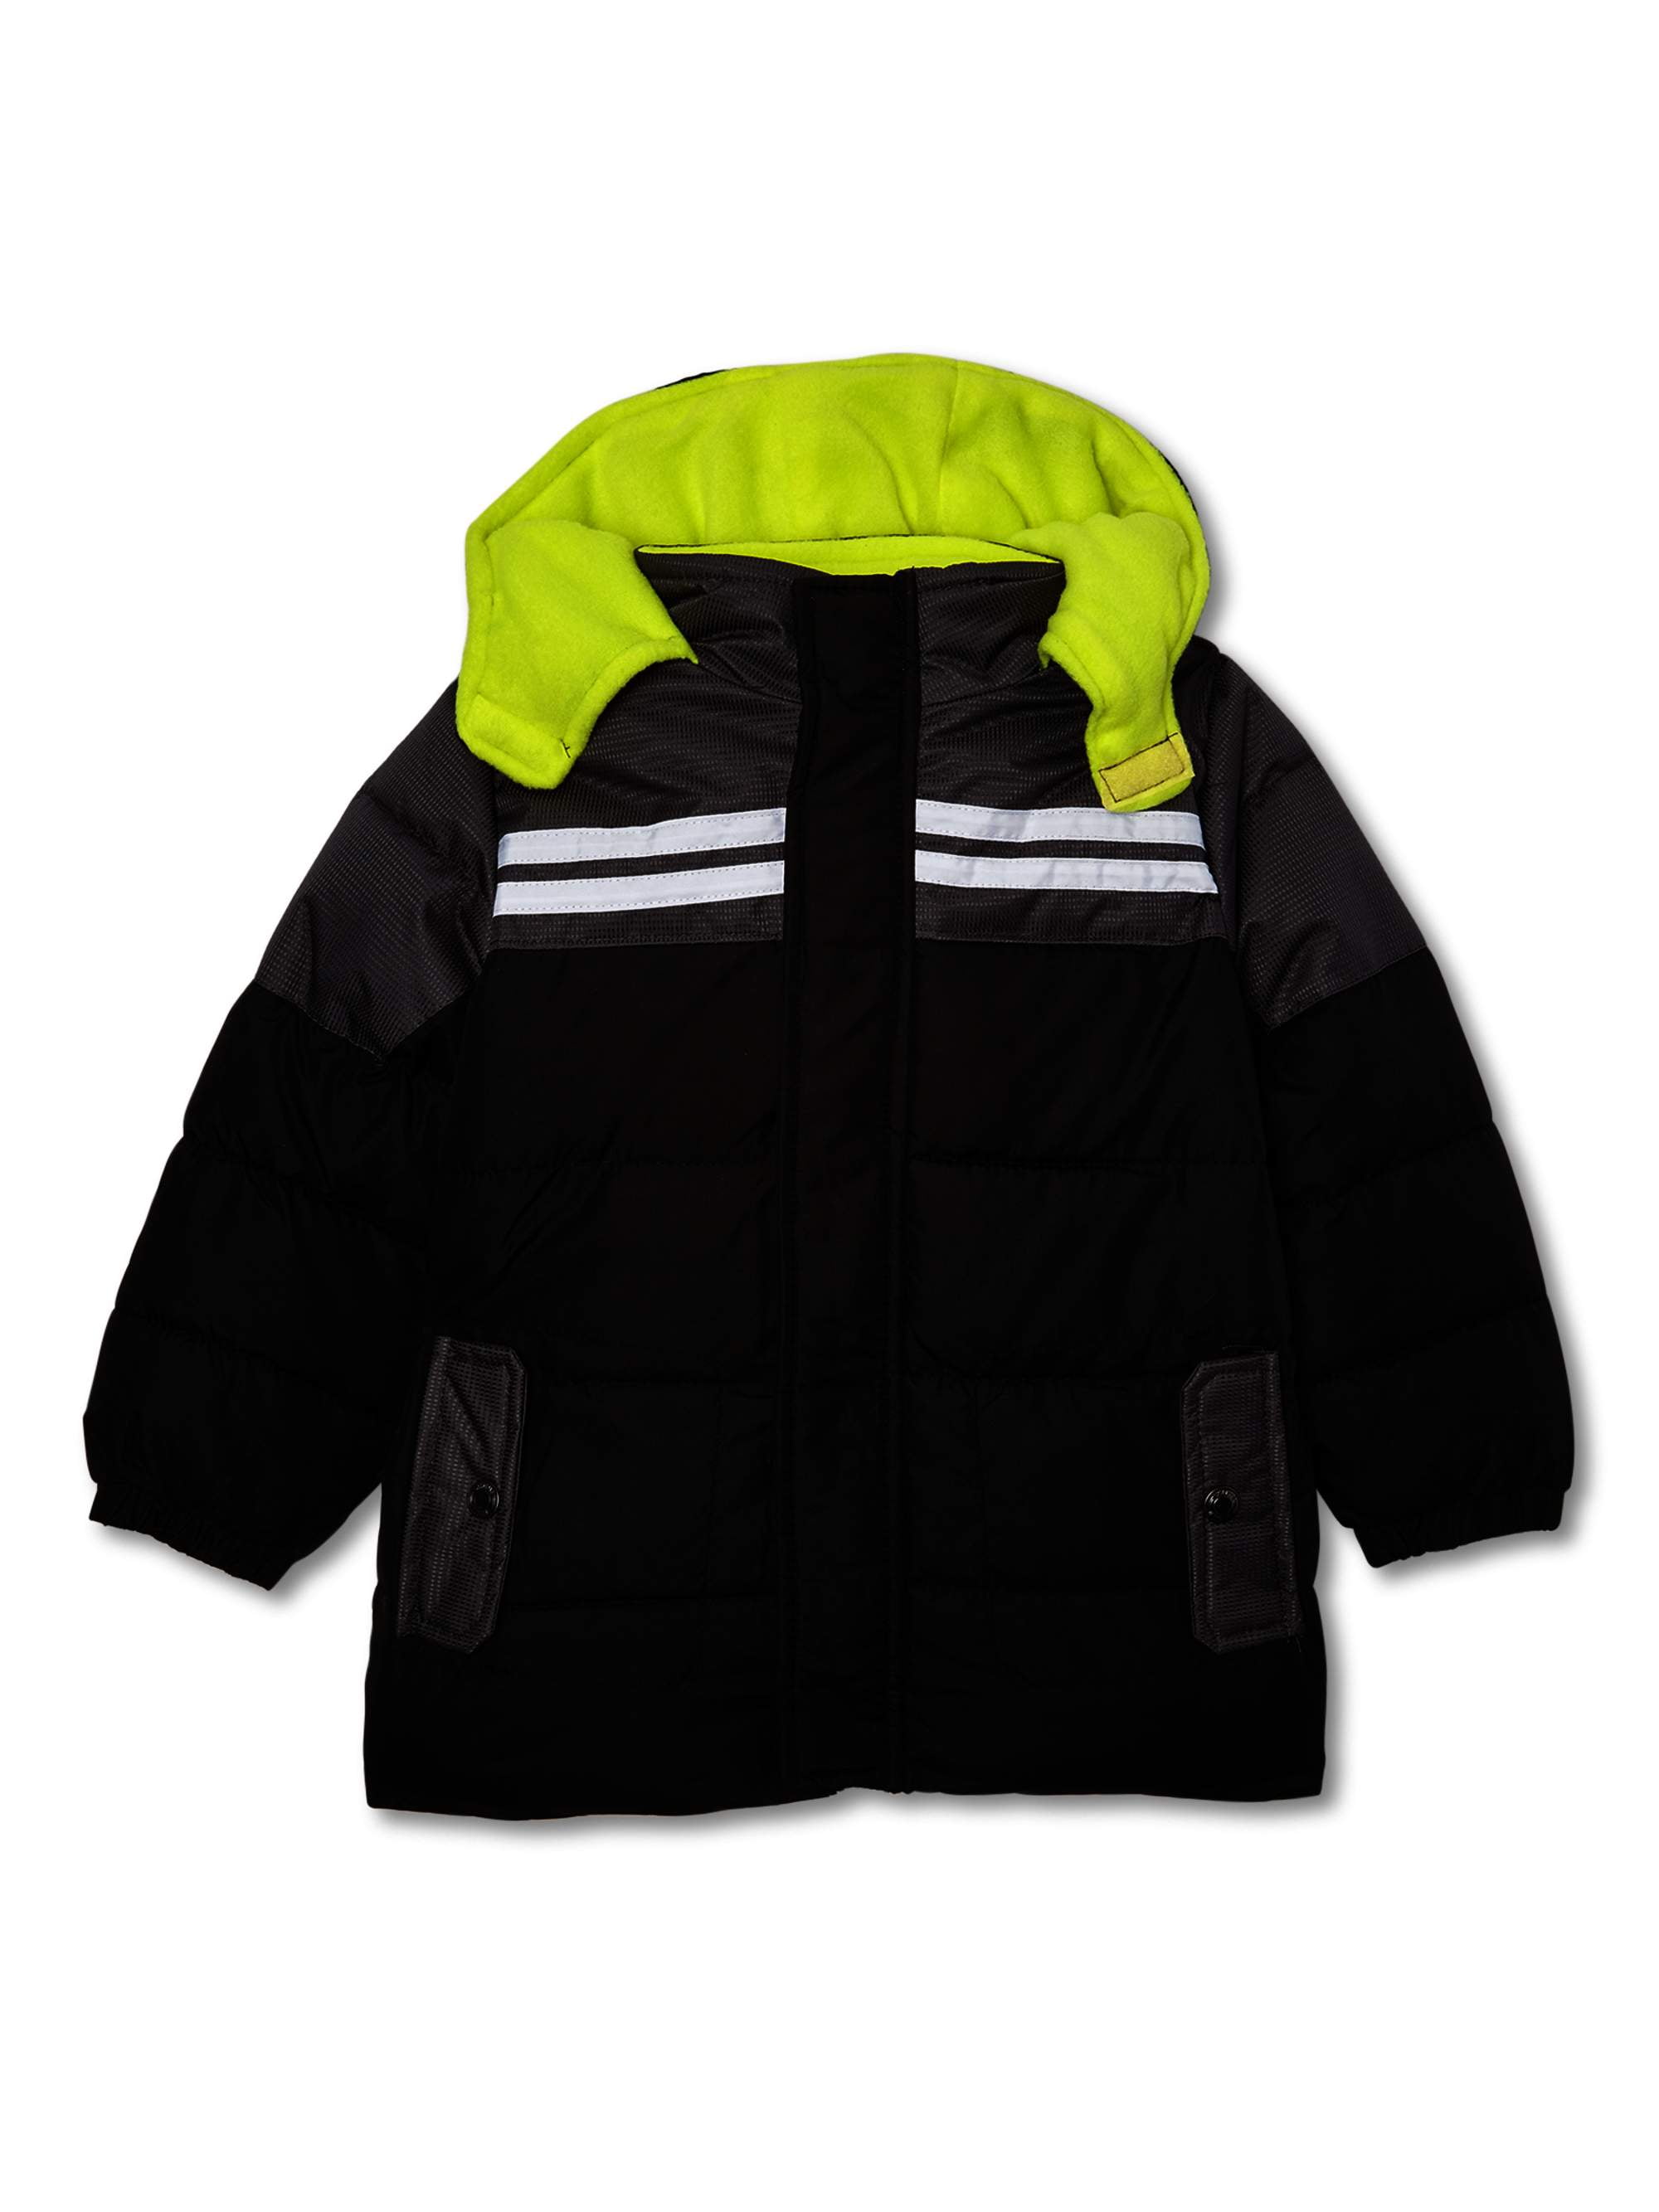 iXtreme boys Colorblock Fleece Jacket 